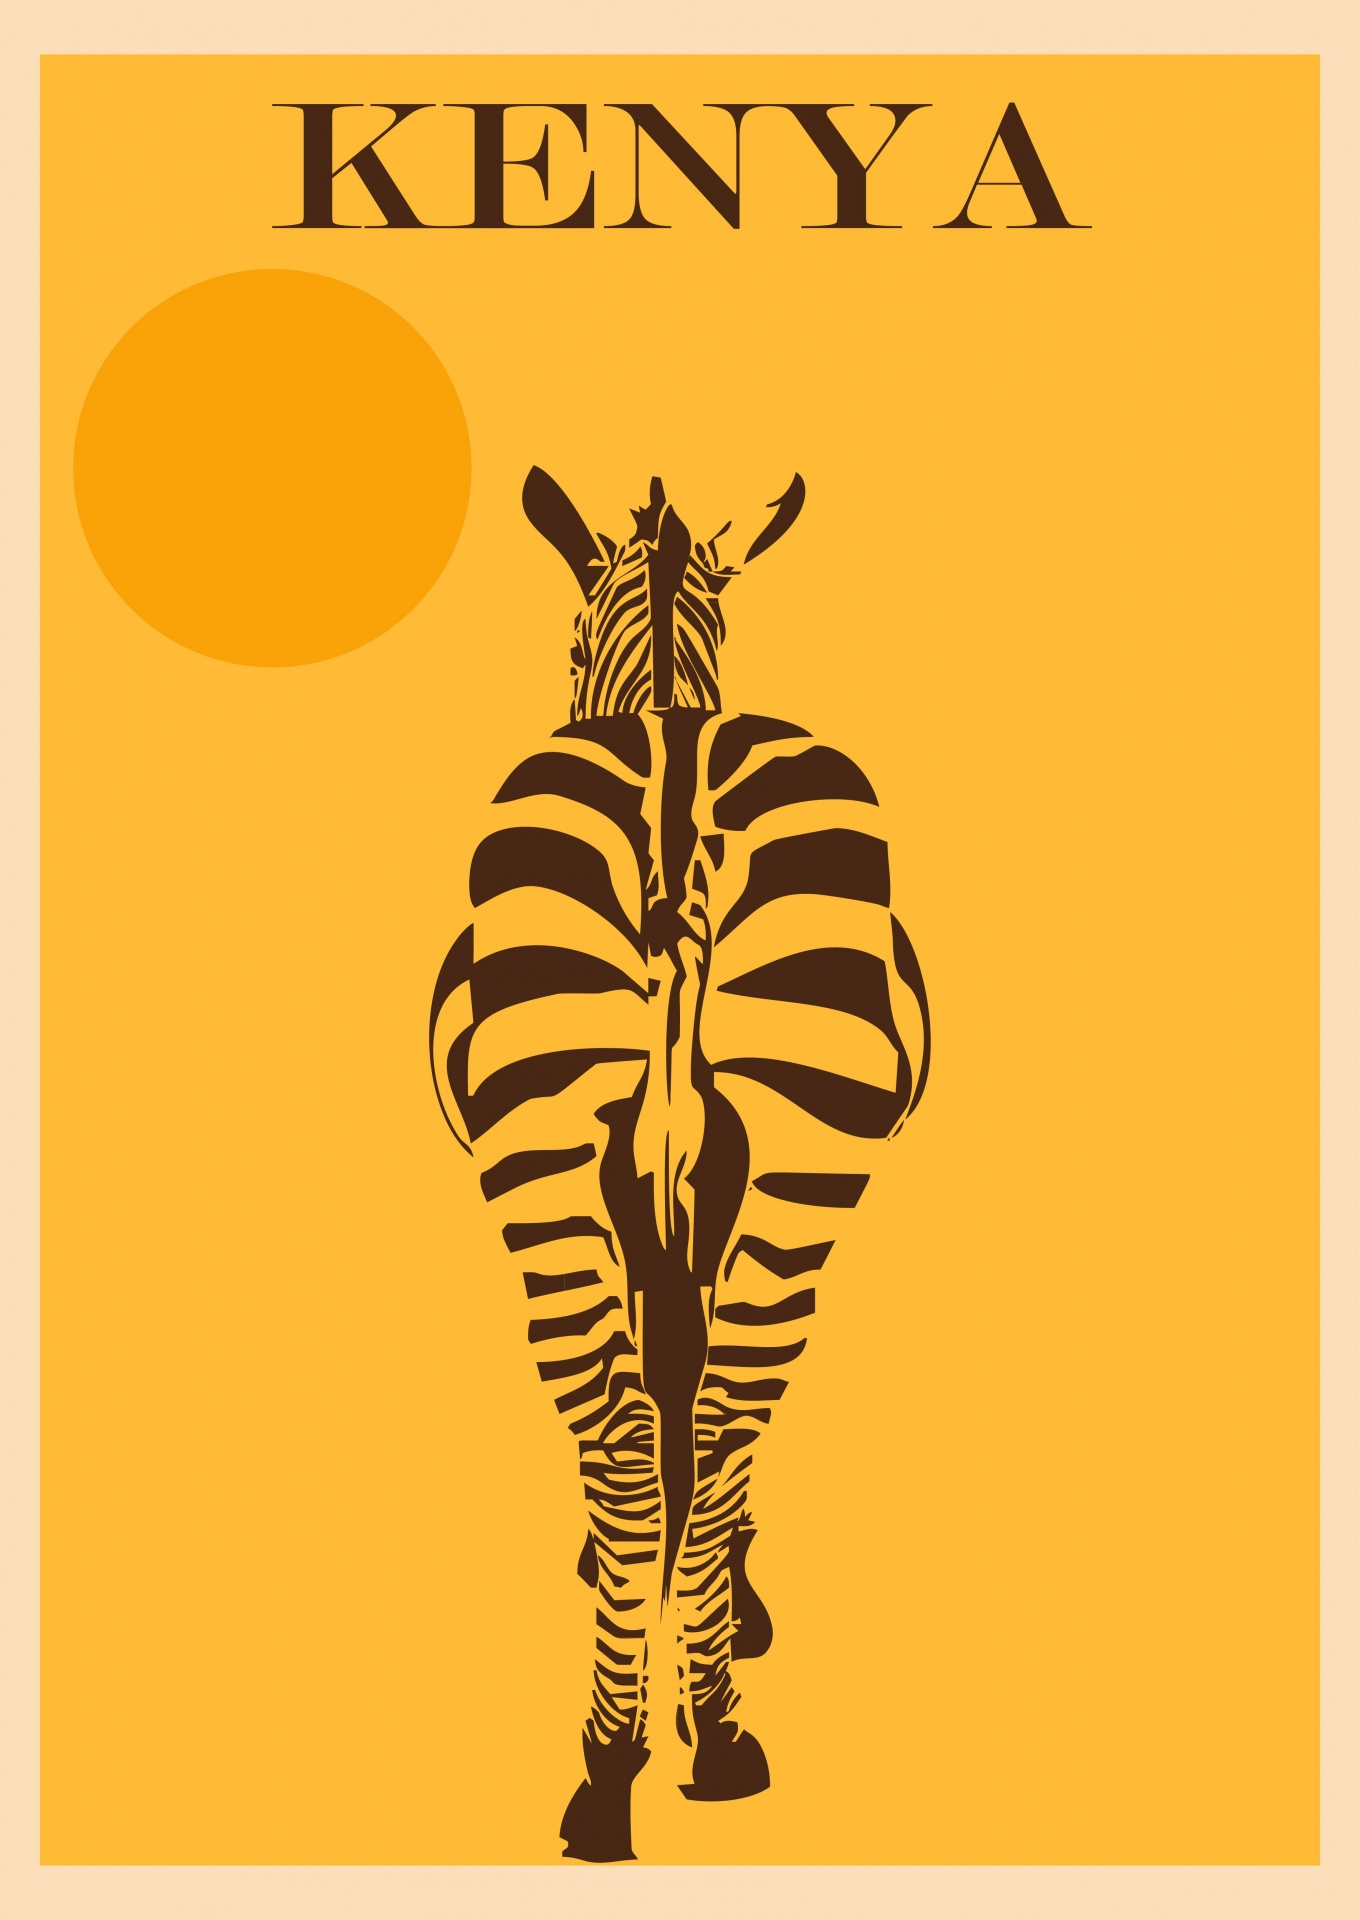 Retro, vintage style modern travel poster for Kenya, Africa vector digital illustration with zebra at sunset